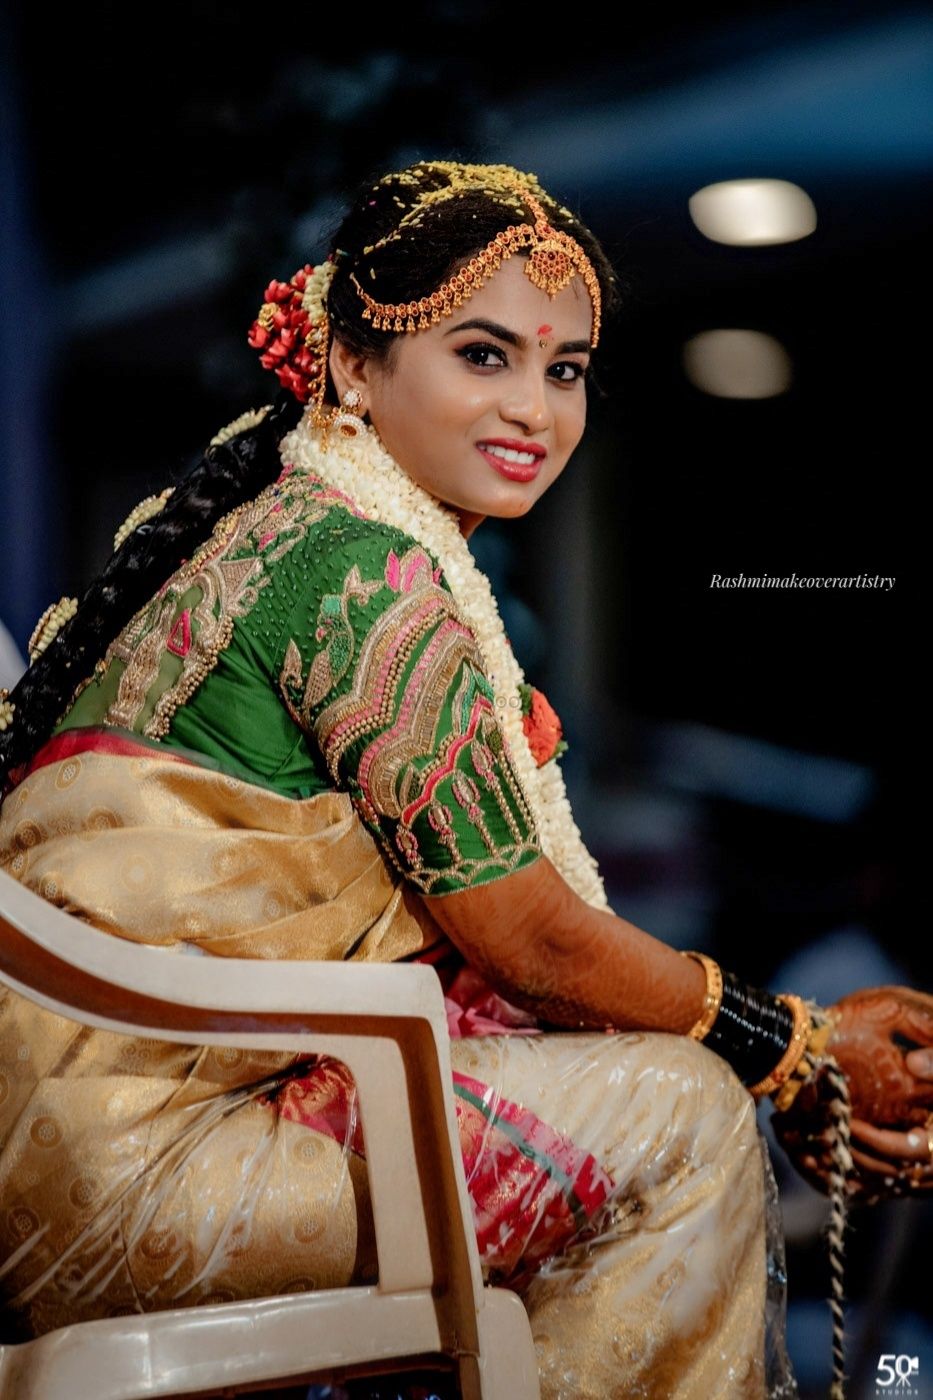 Photo By Rashmi Makeover Artistry - Bridal Makeup